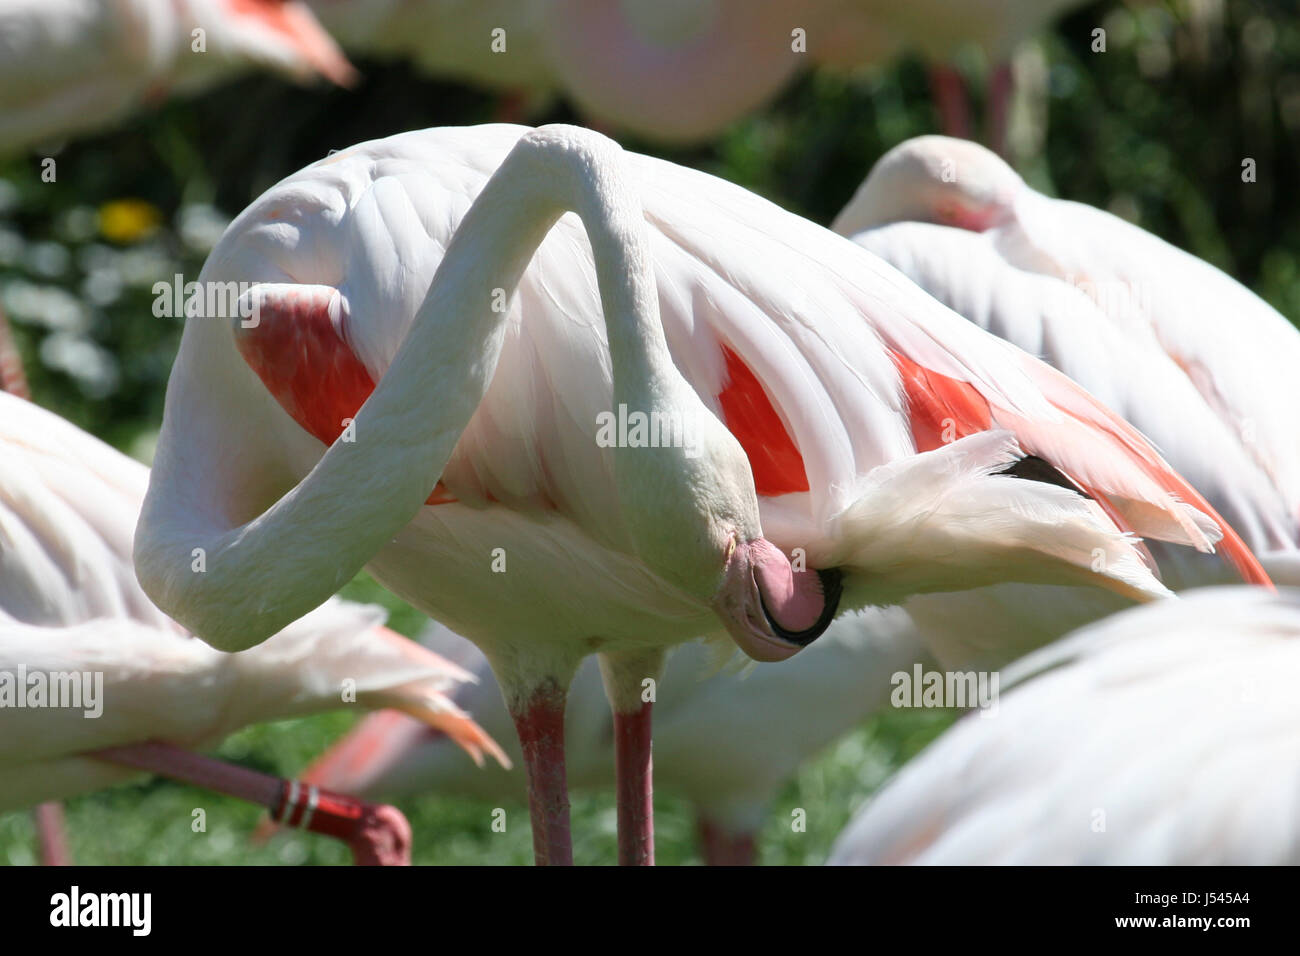 legs bird birds feathers beak feathering furbish beaks red neck pink flamingo Stock Photo